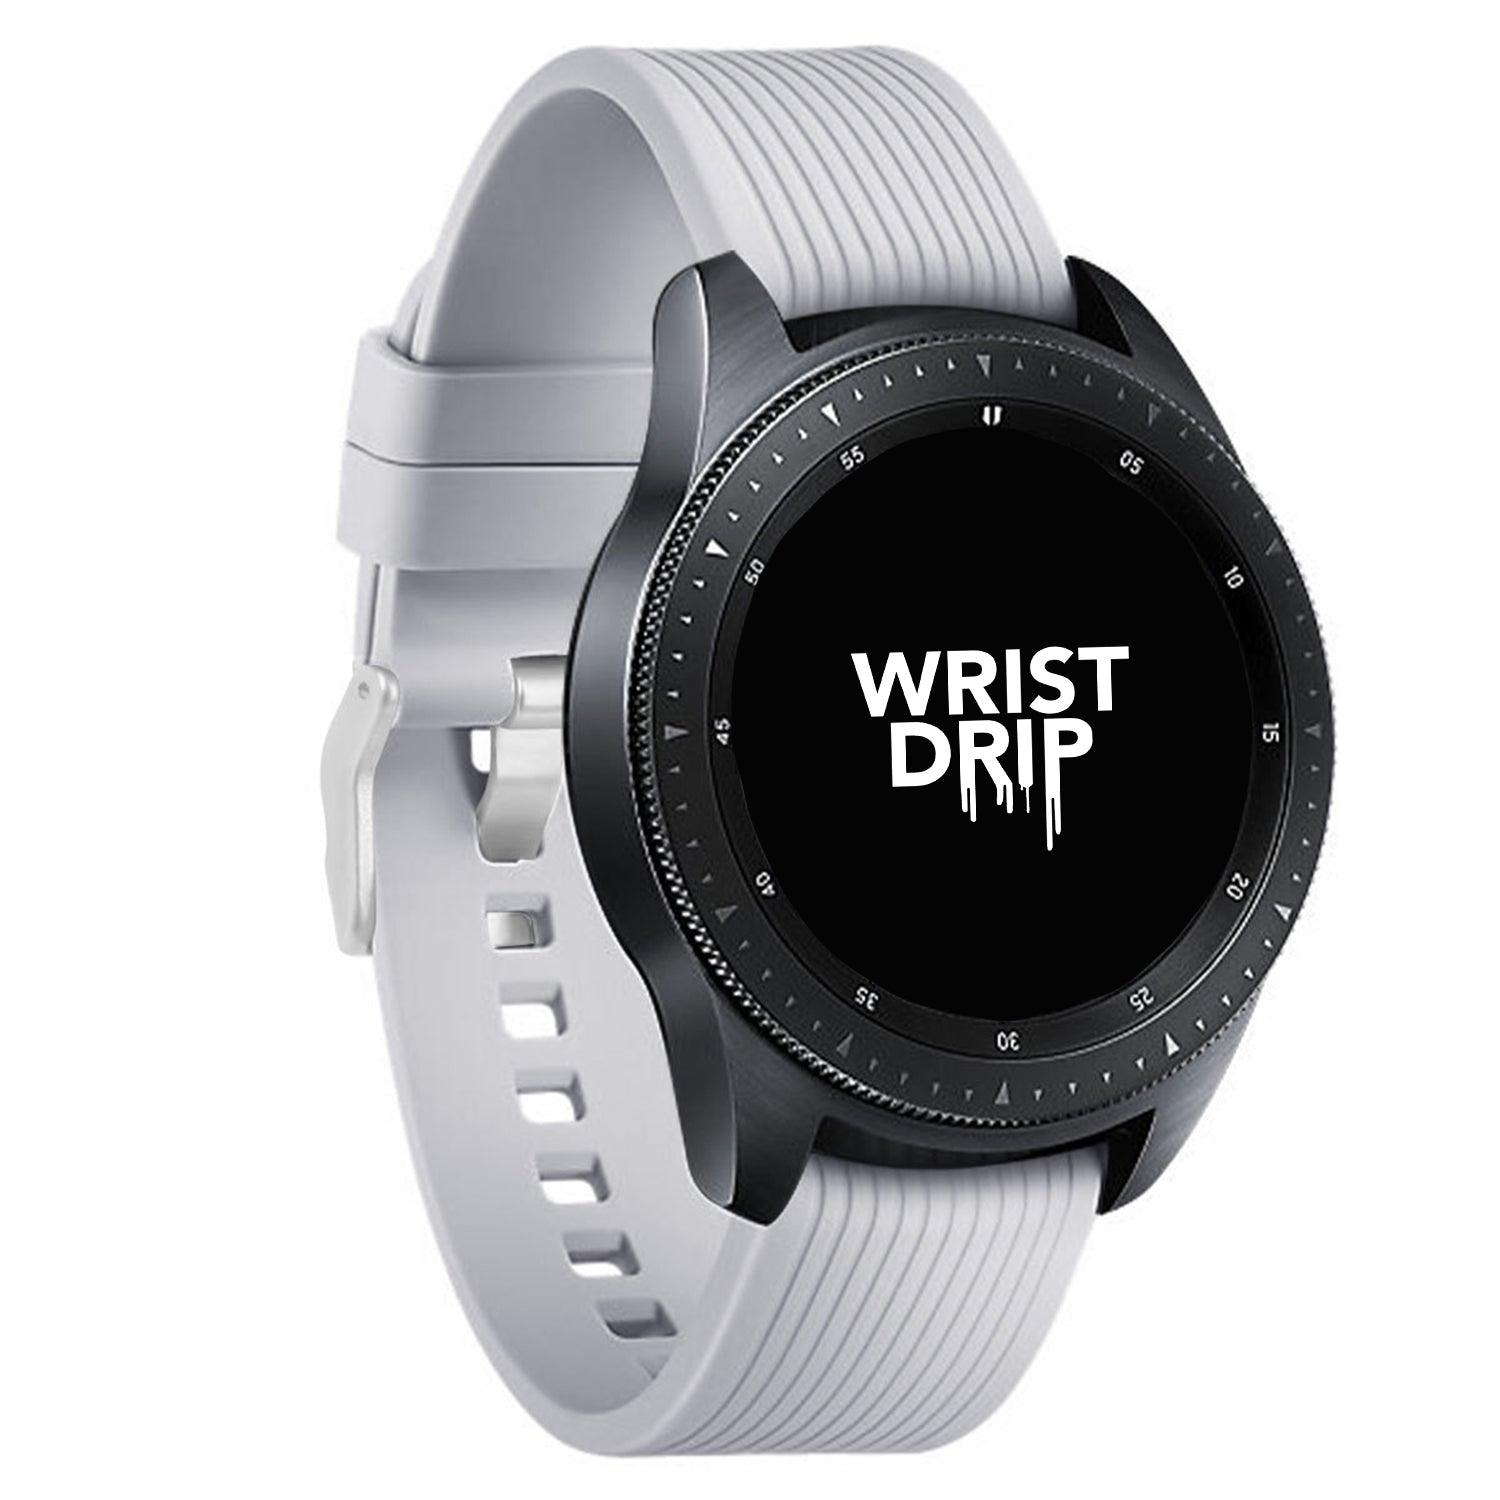 The April Samsung Galaxy Watch (5 Colours) - shopwristdrip